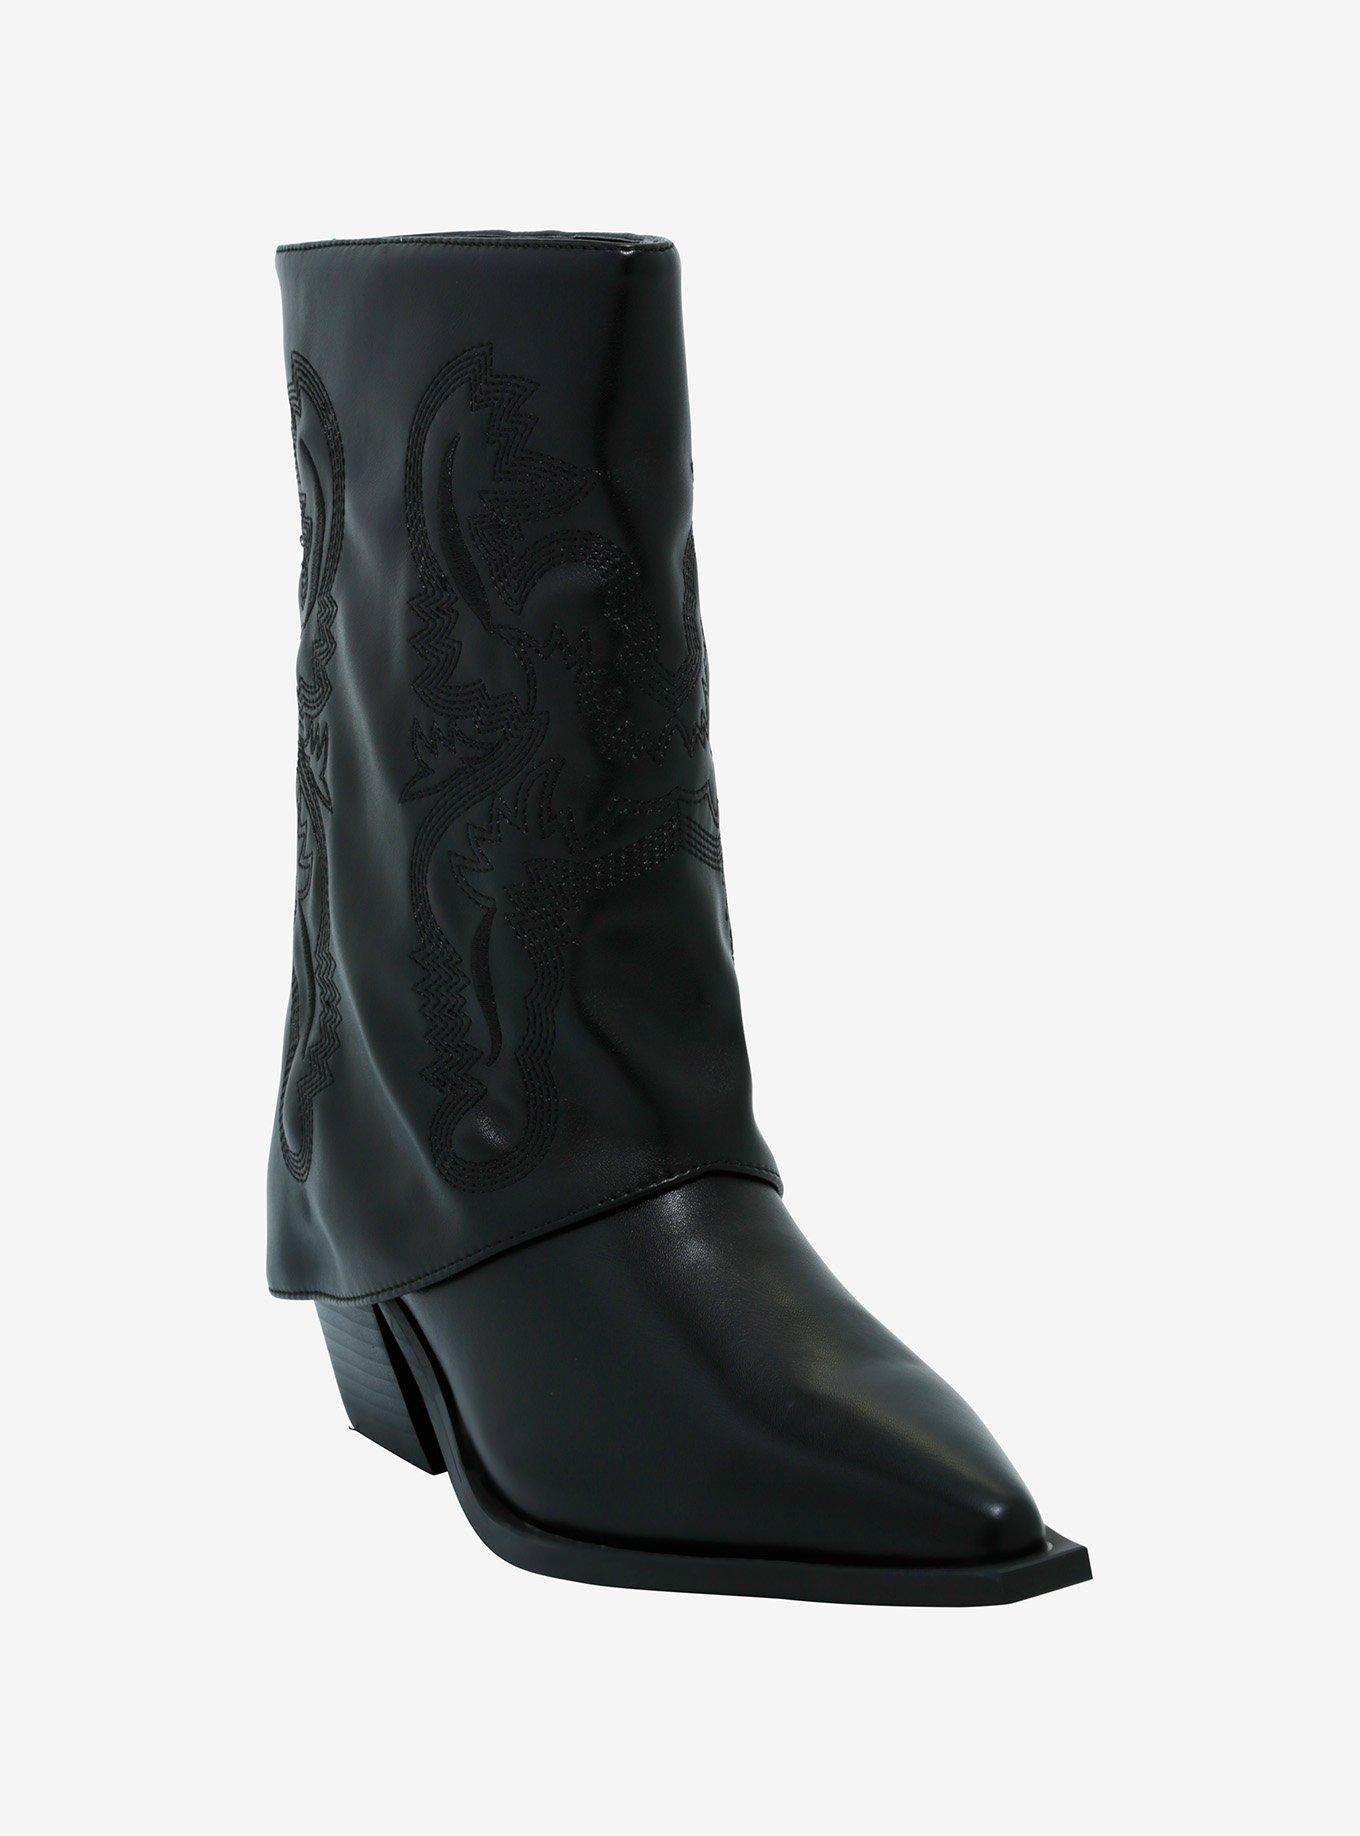 Azalea Wang Black Foldover Western Boots